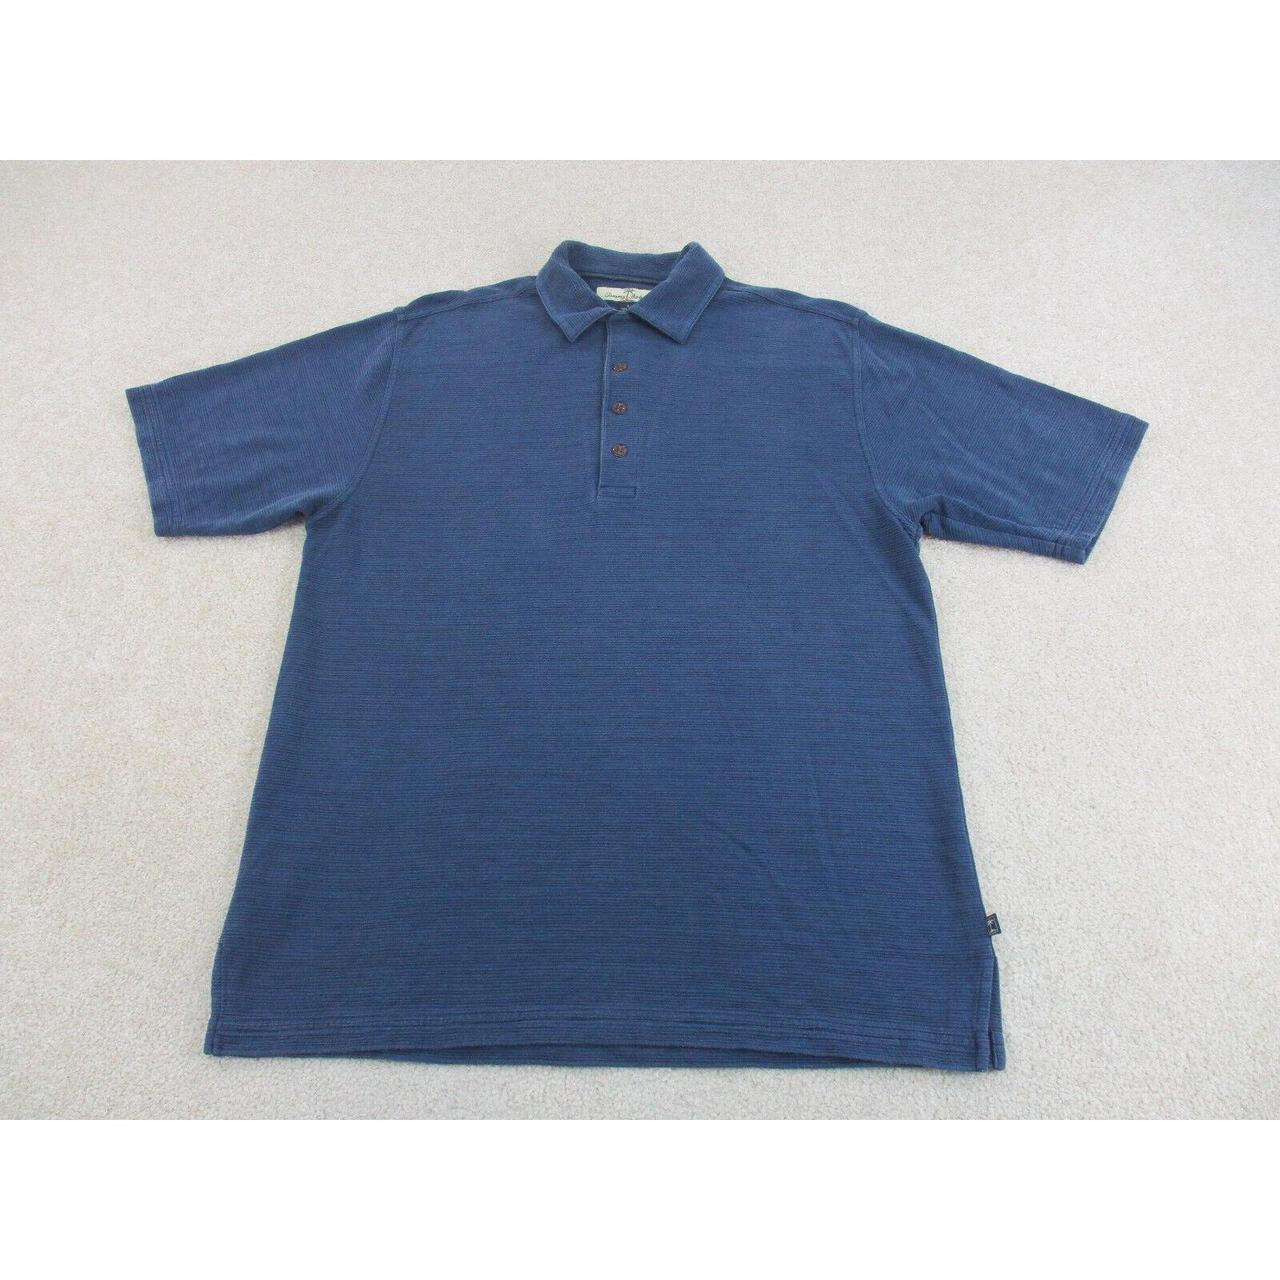 Product Image 1 - Tommy Bahama Polo Shirt Adult